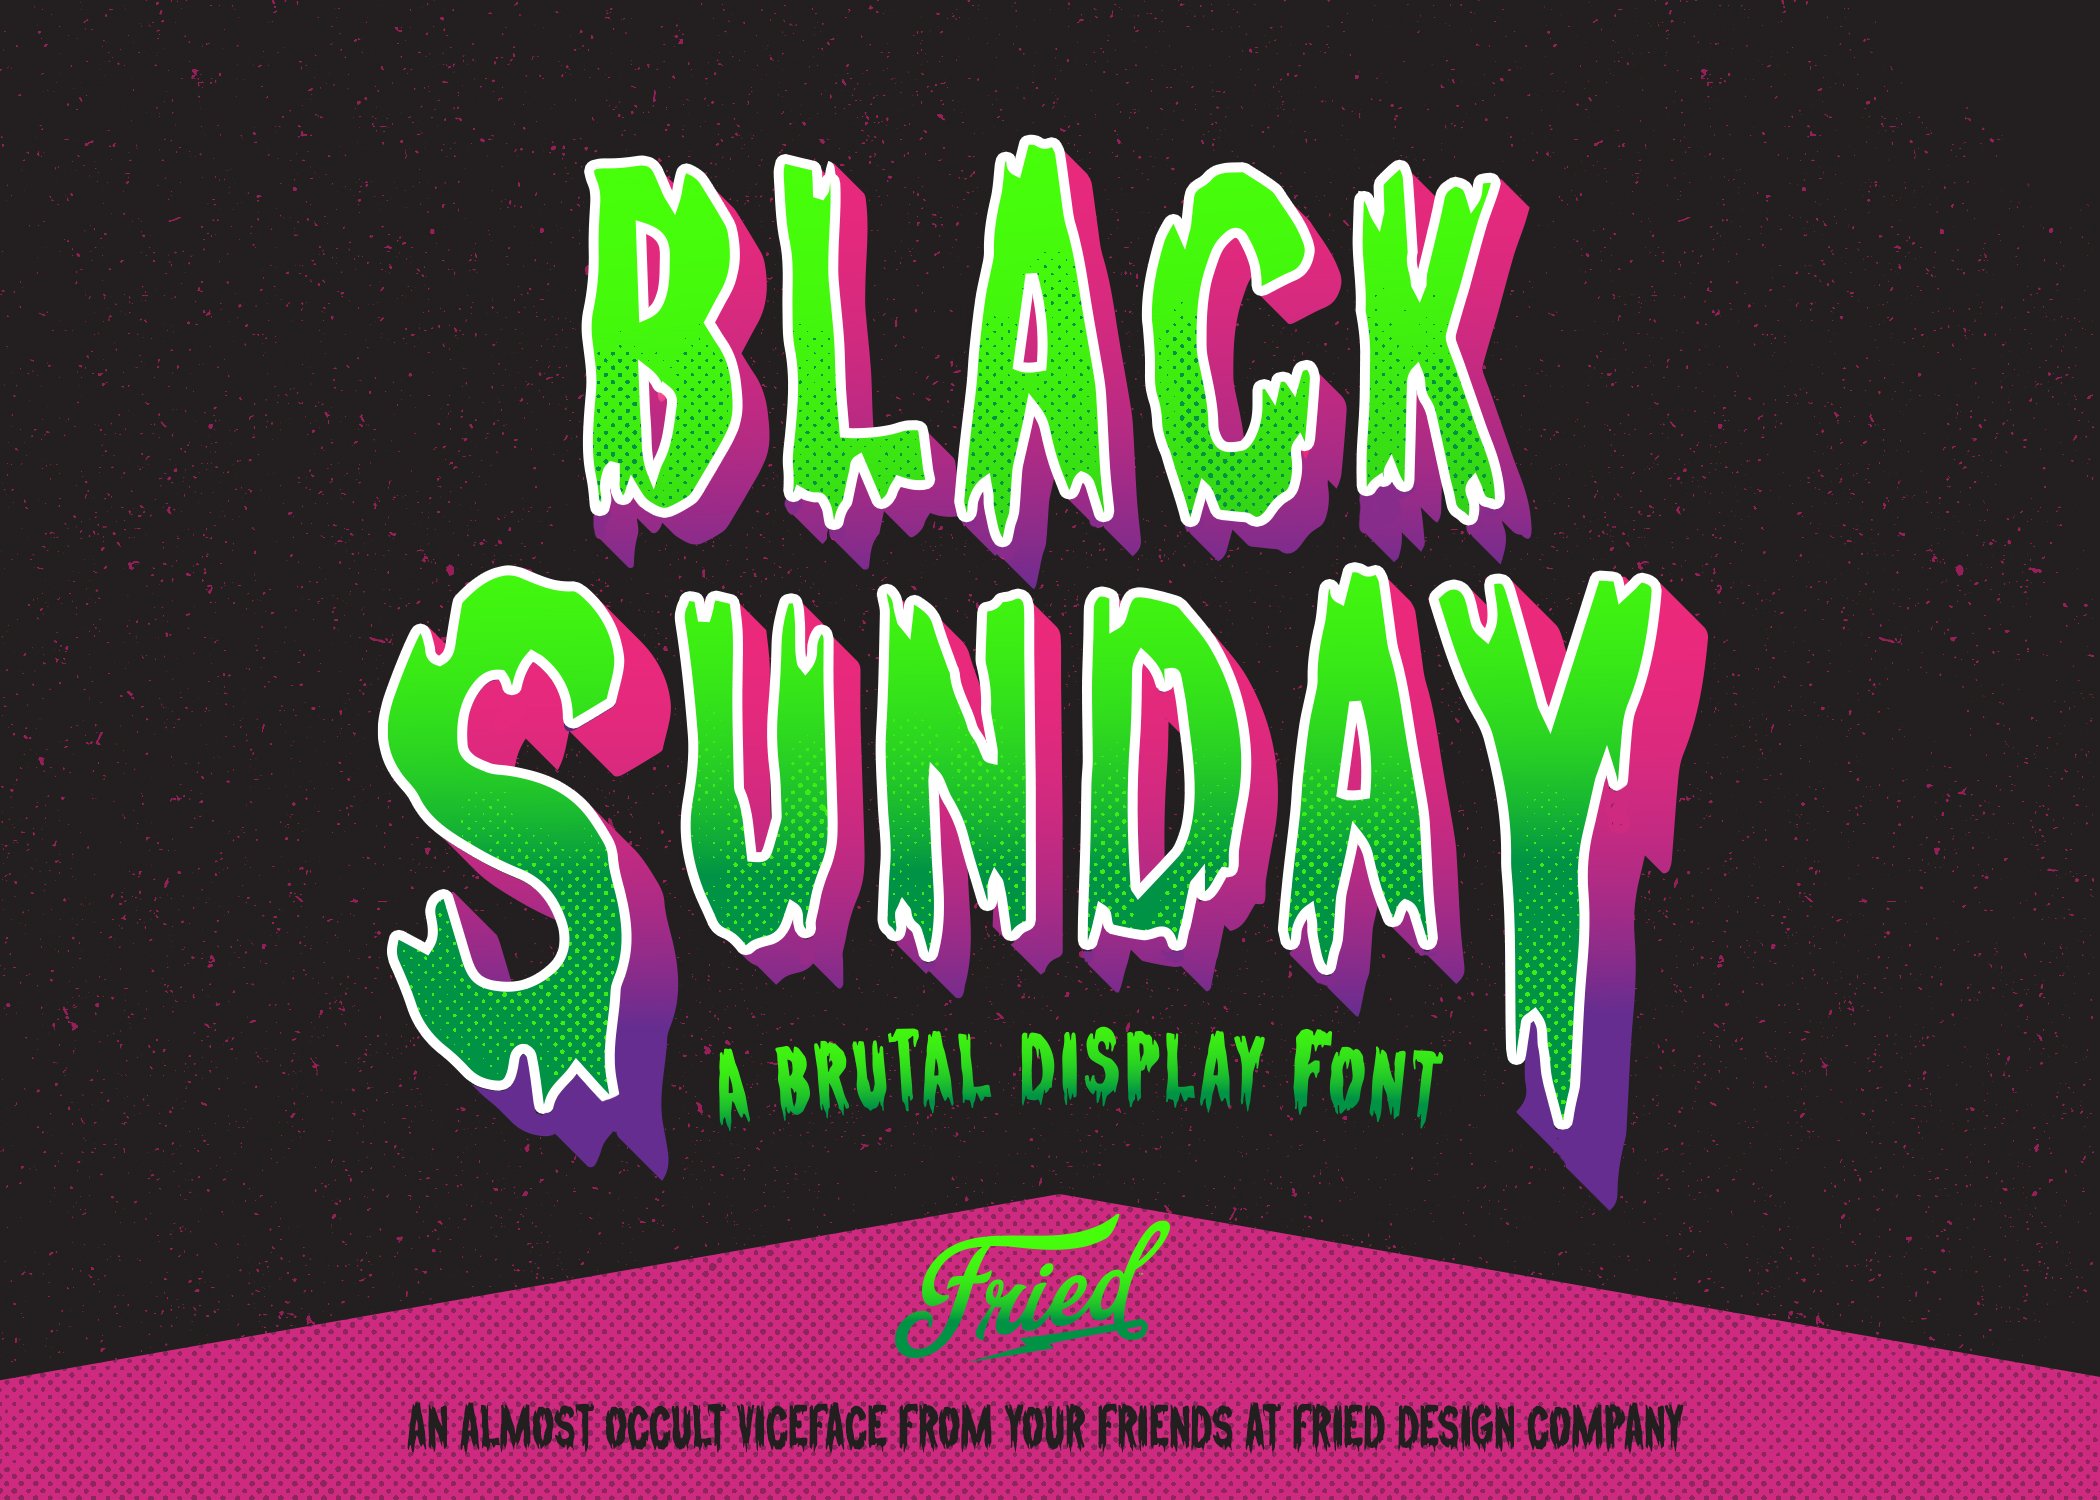 Black Sunday Display Font cover image.